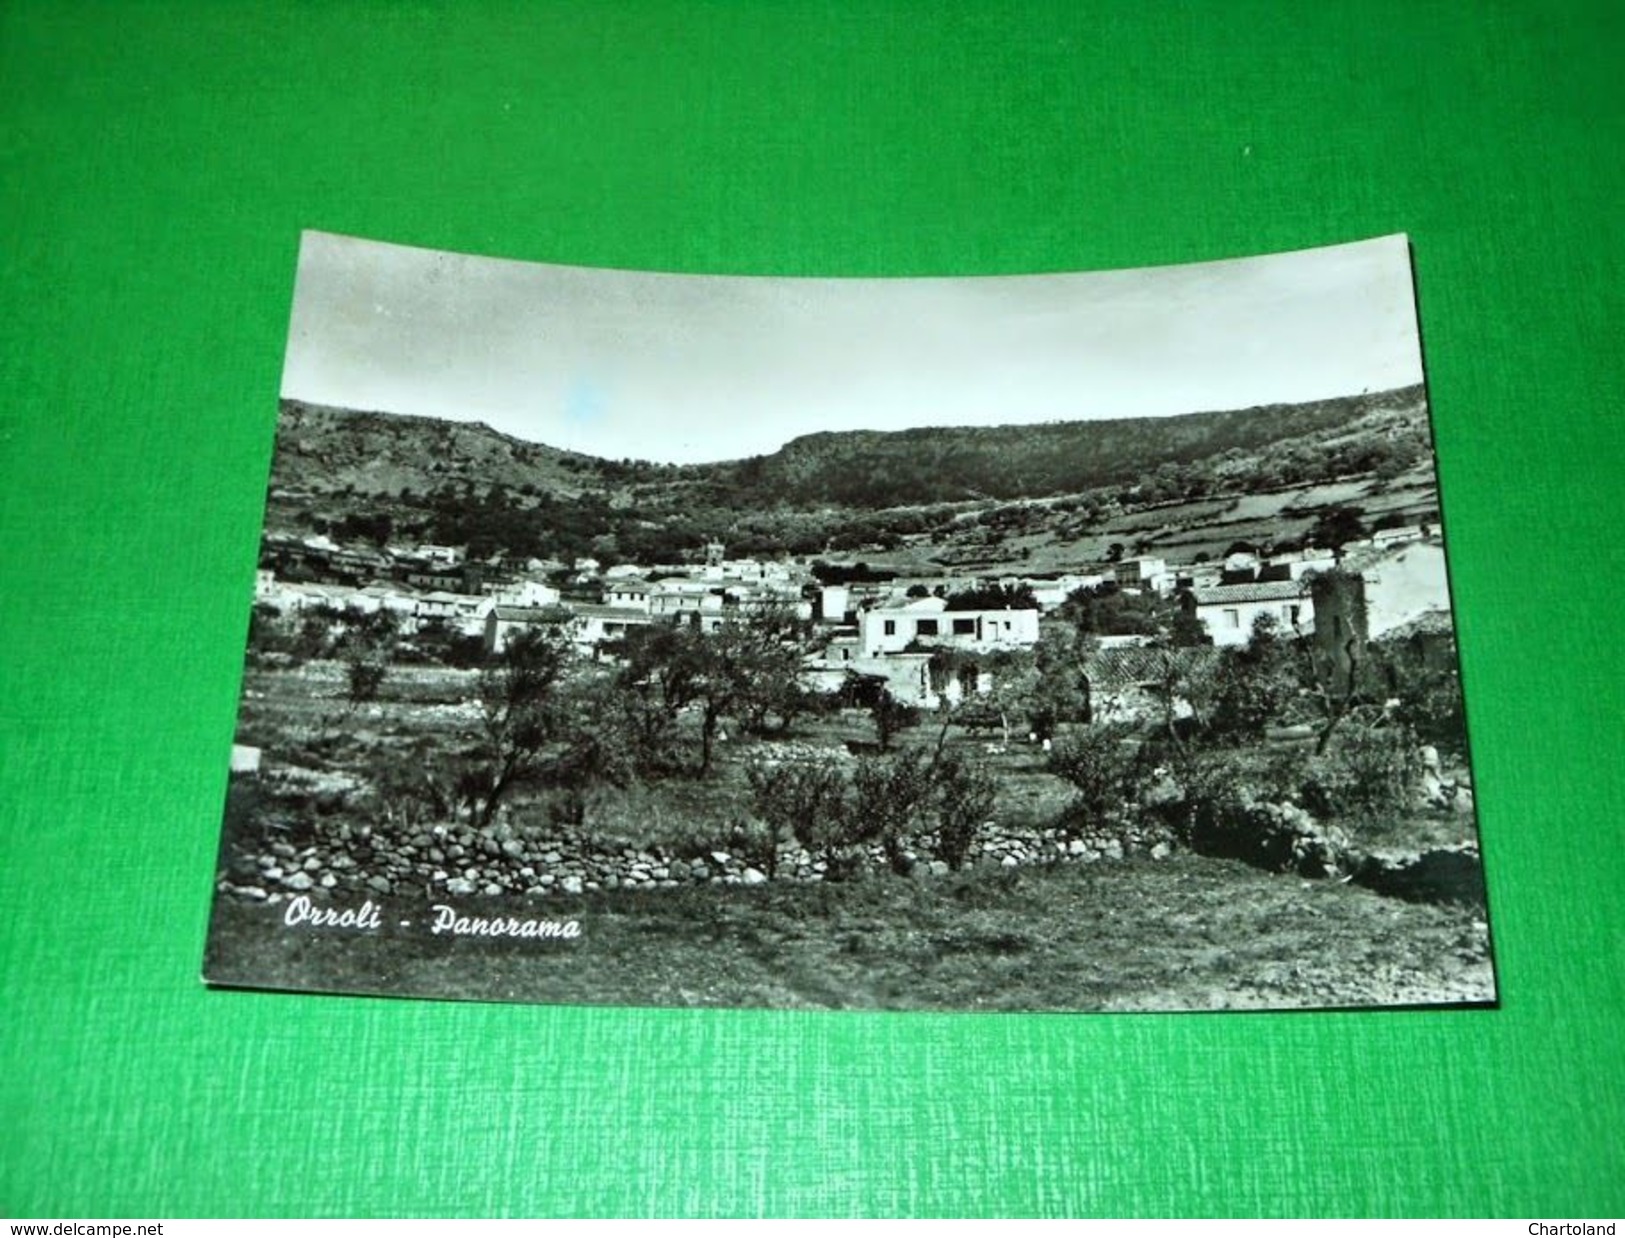 Cartolina Orroli - Panorama 1967 - Cagliari